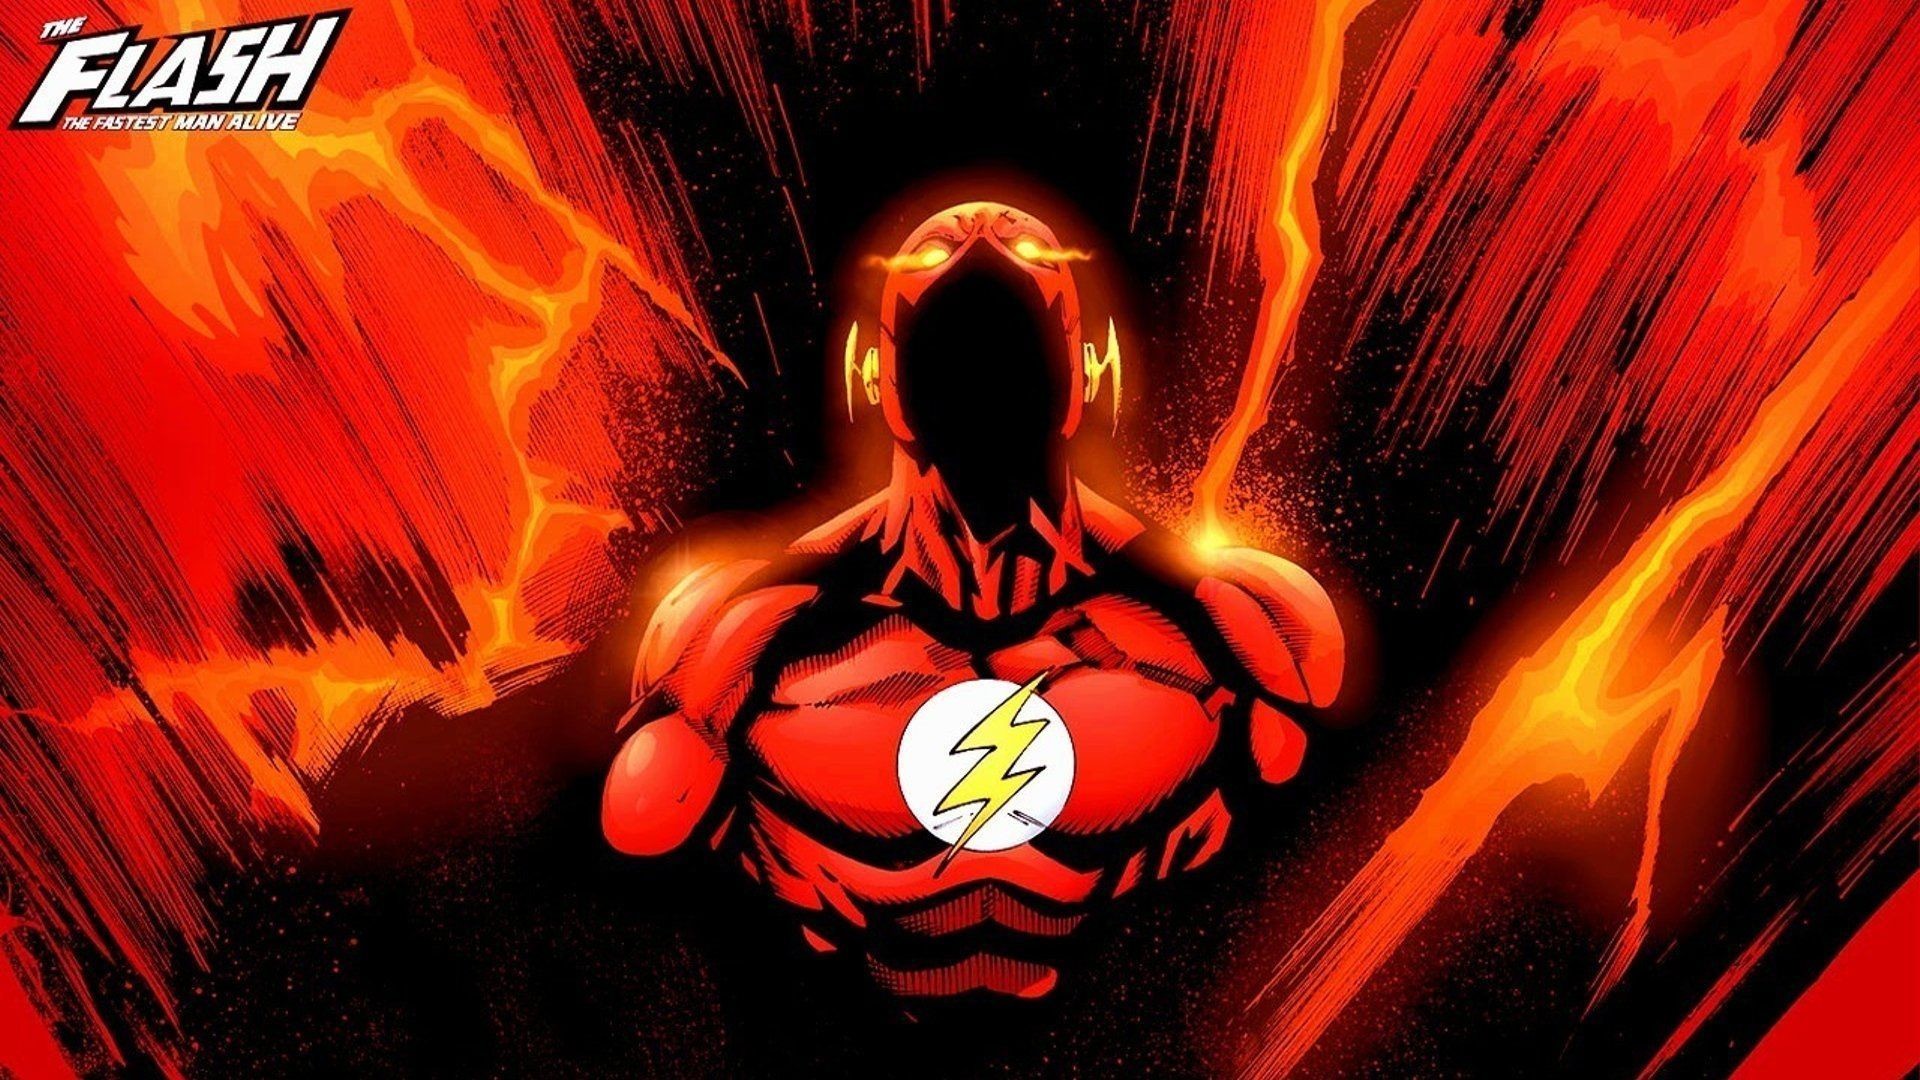 DC Comics The Flash Flash (superhero) wallpaper